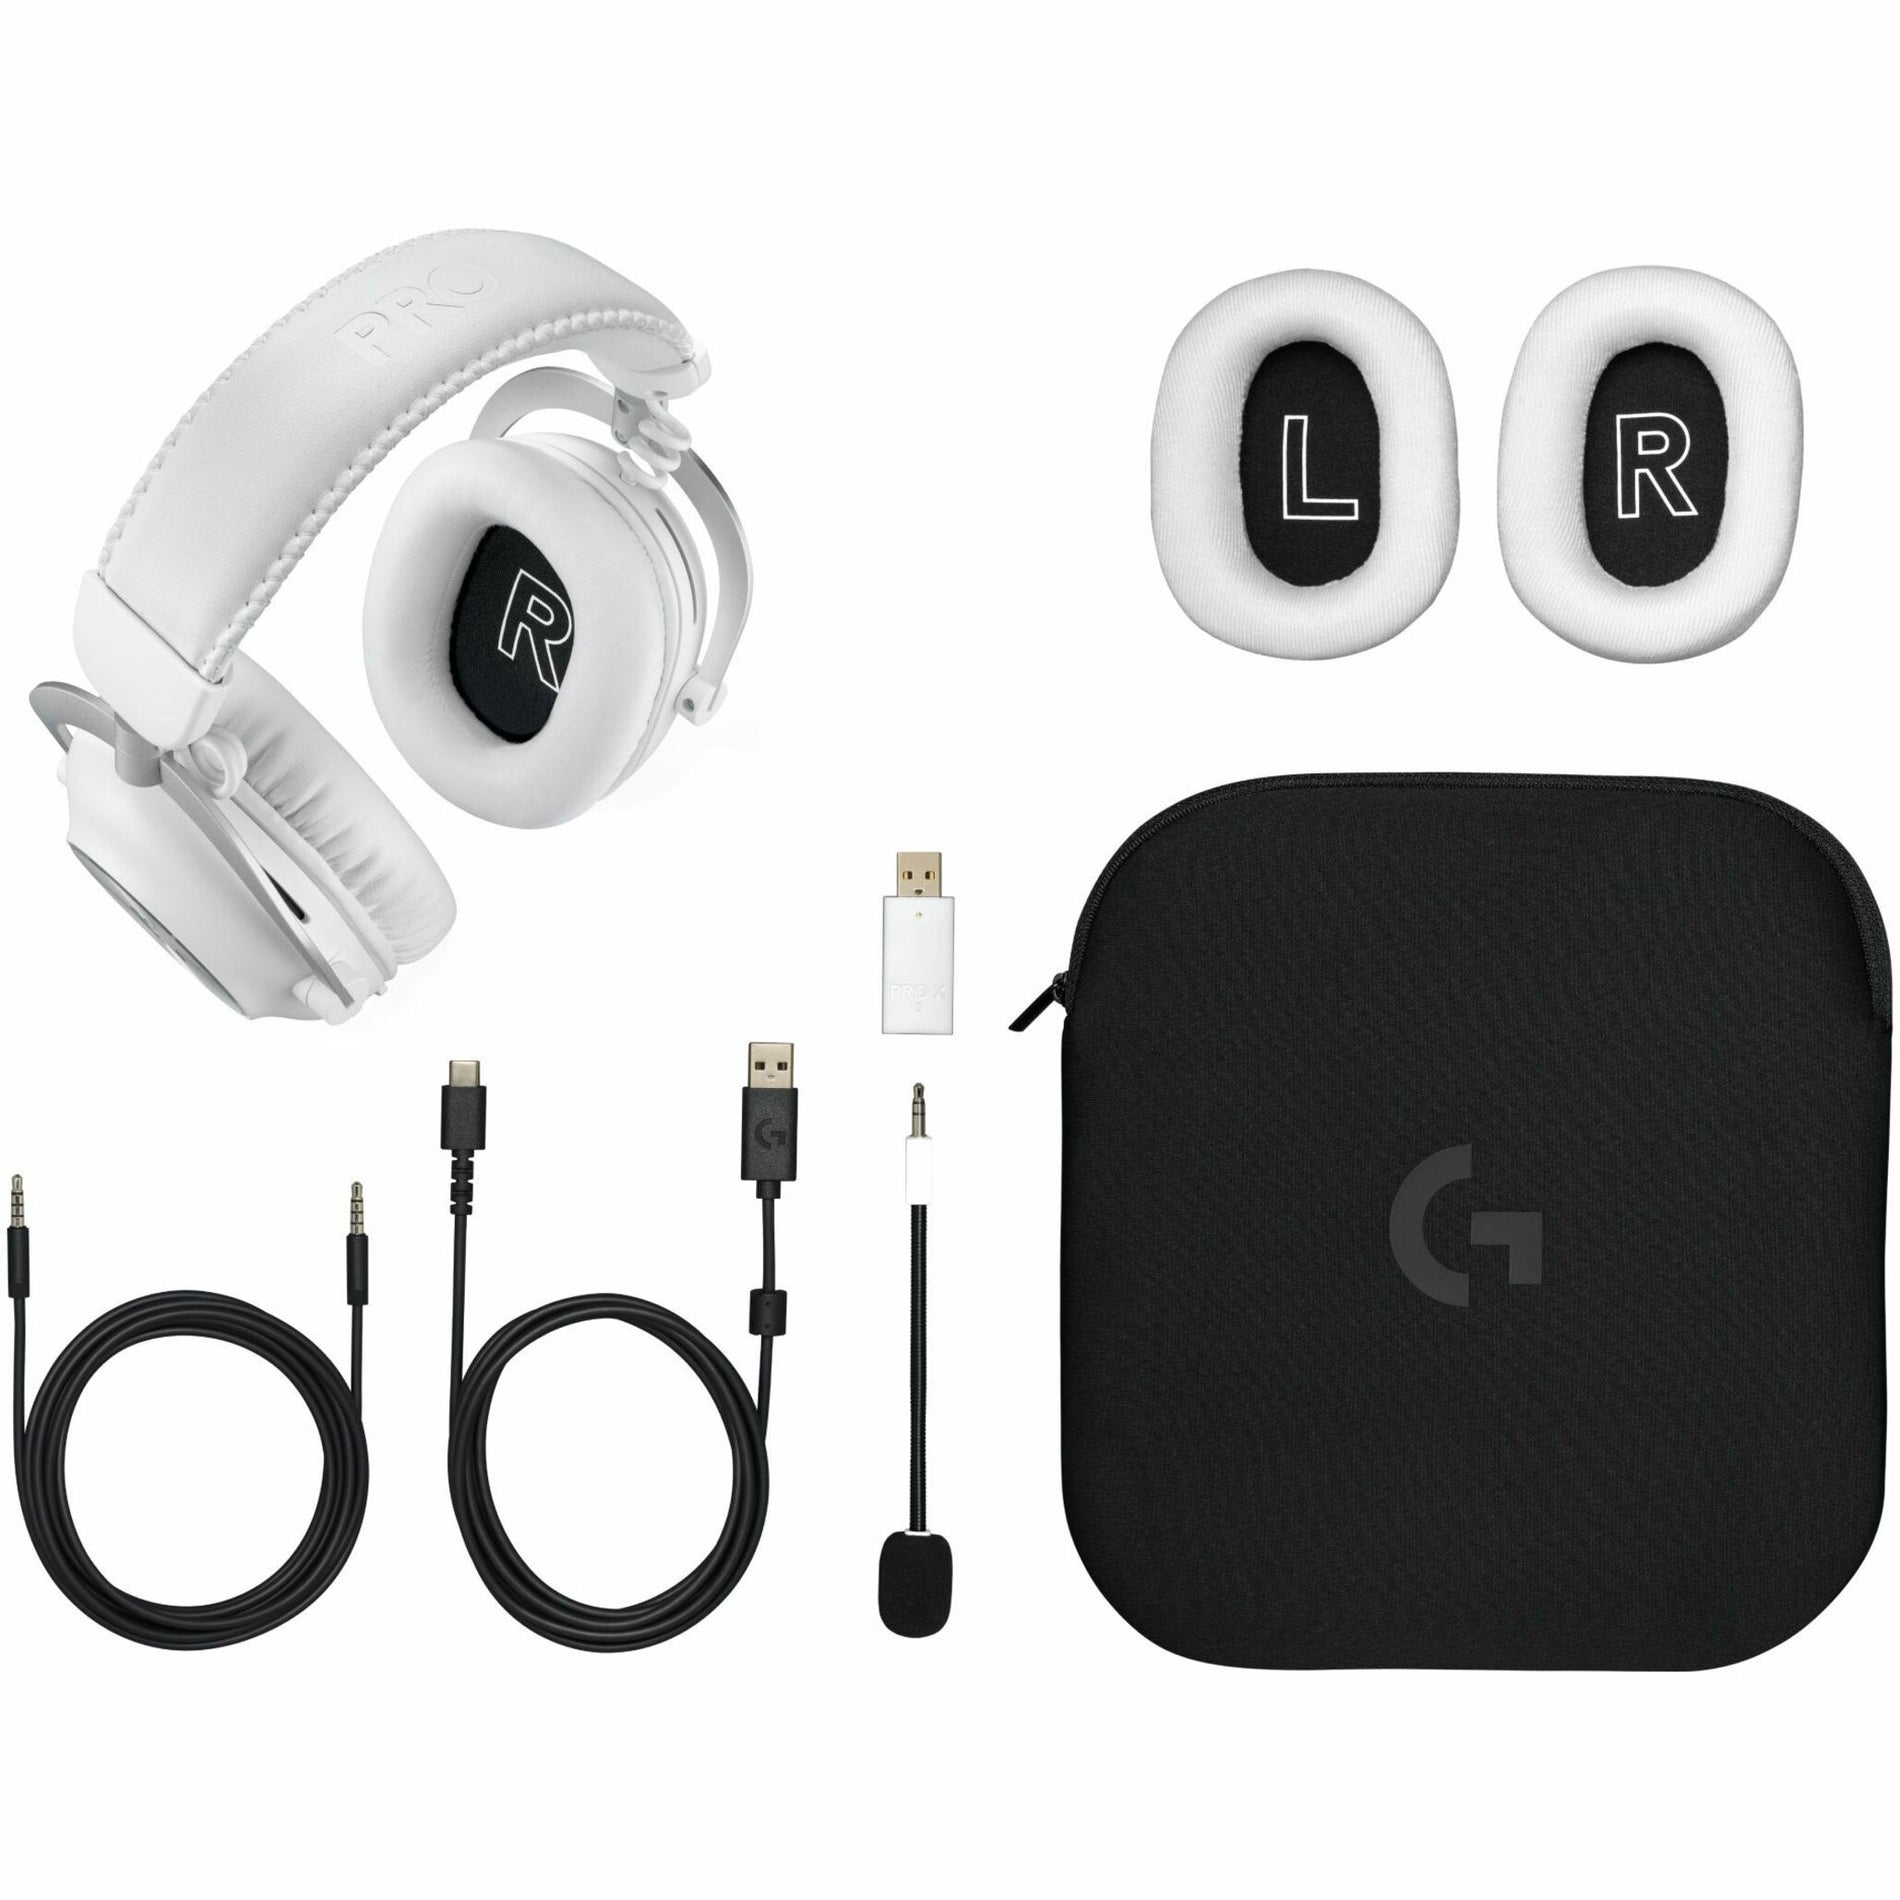 Logitech G 981-001268 PRO X 2 Gaming Headset, Durable, Comfortable, 7.1 Surround Sound, Wireless Technology